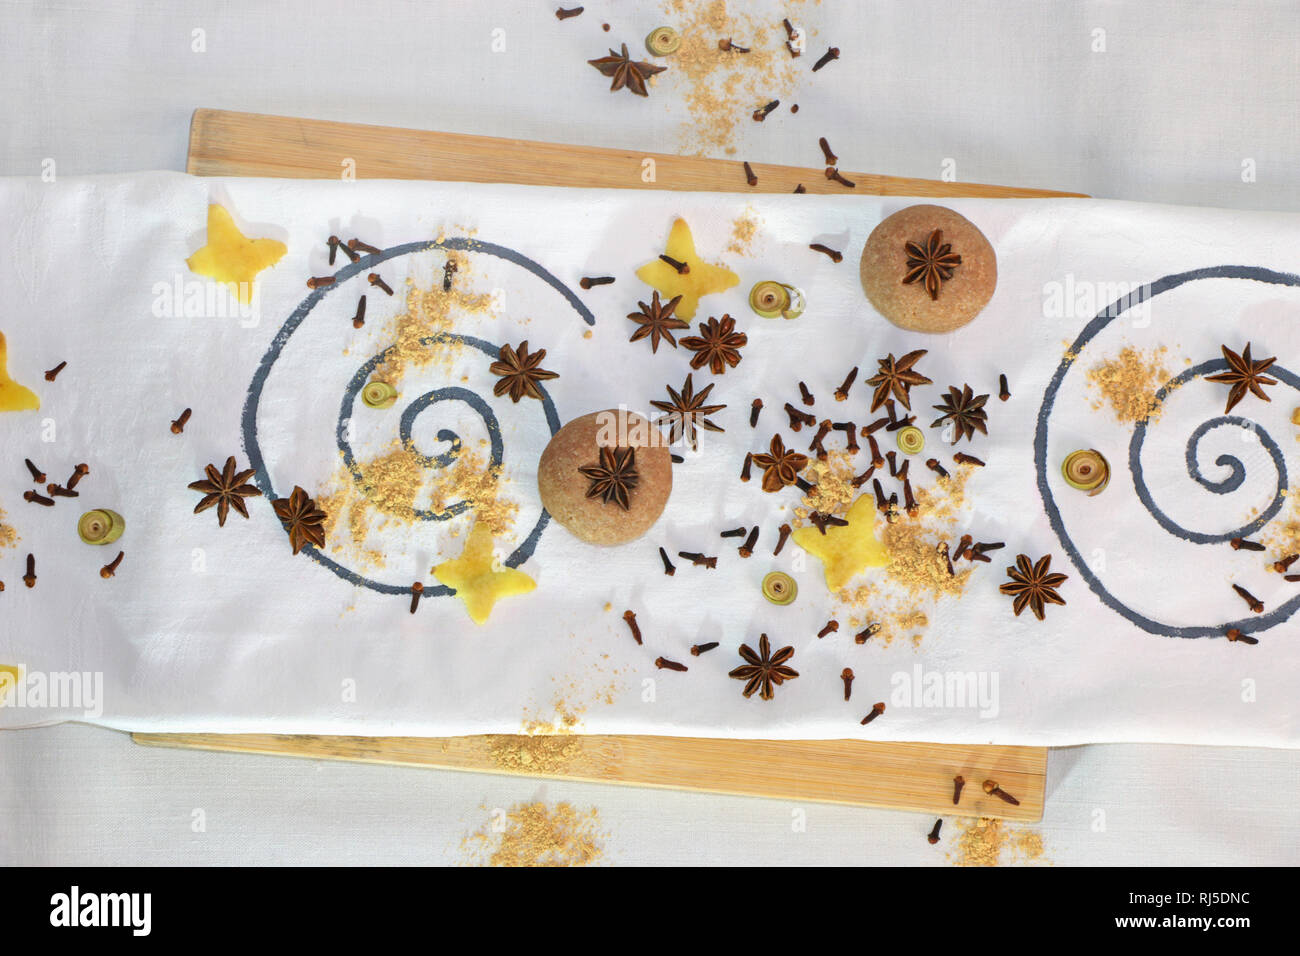 Ingwer in Schmetterlingsform mit Sternanis und Gewürznelken Foto Stock